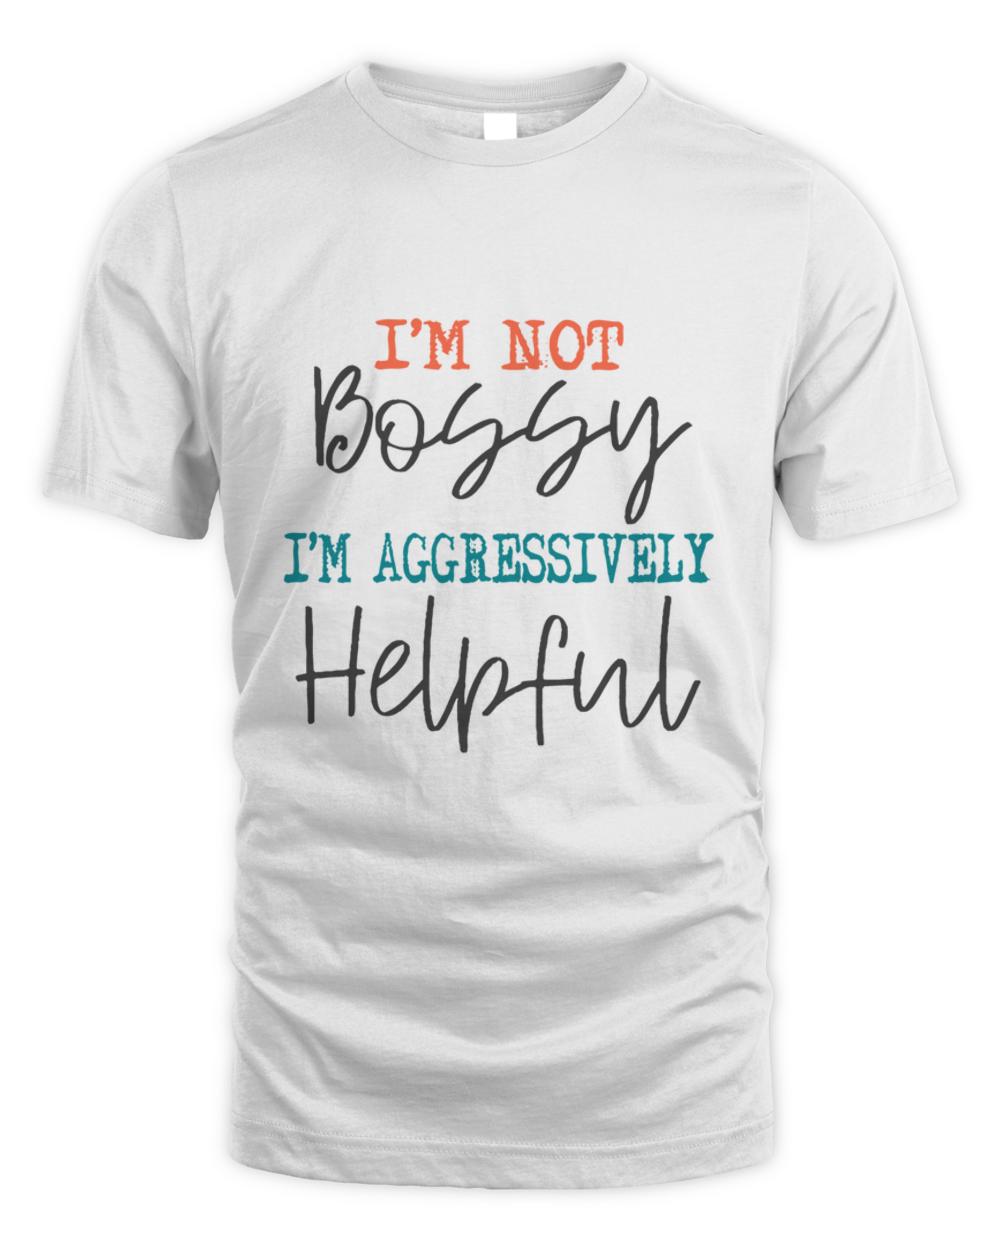 Original im not bossy  10b14397 t-shirt